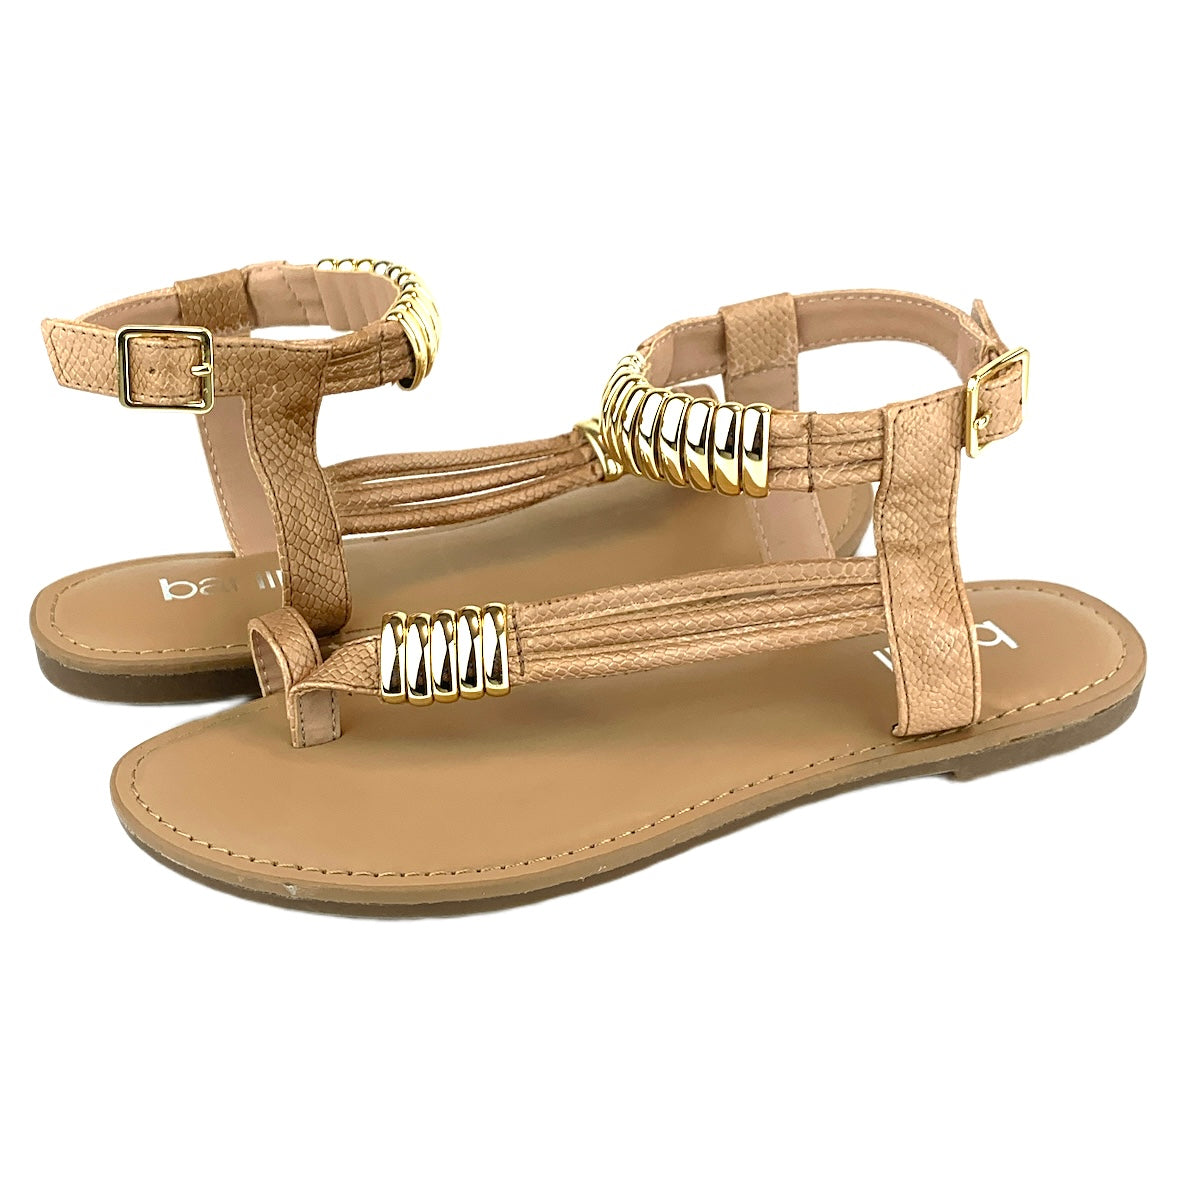 VELLAP Blush Ankle Strap Toe Ring Size 6M Flats Women's Sandals